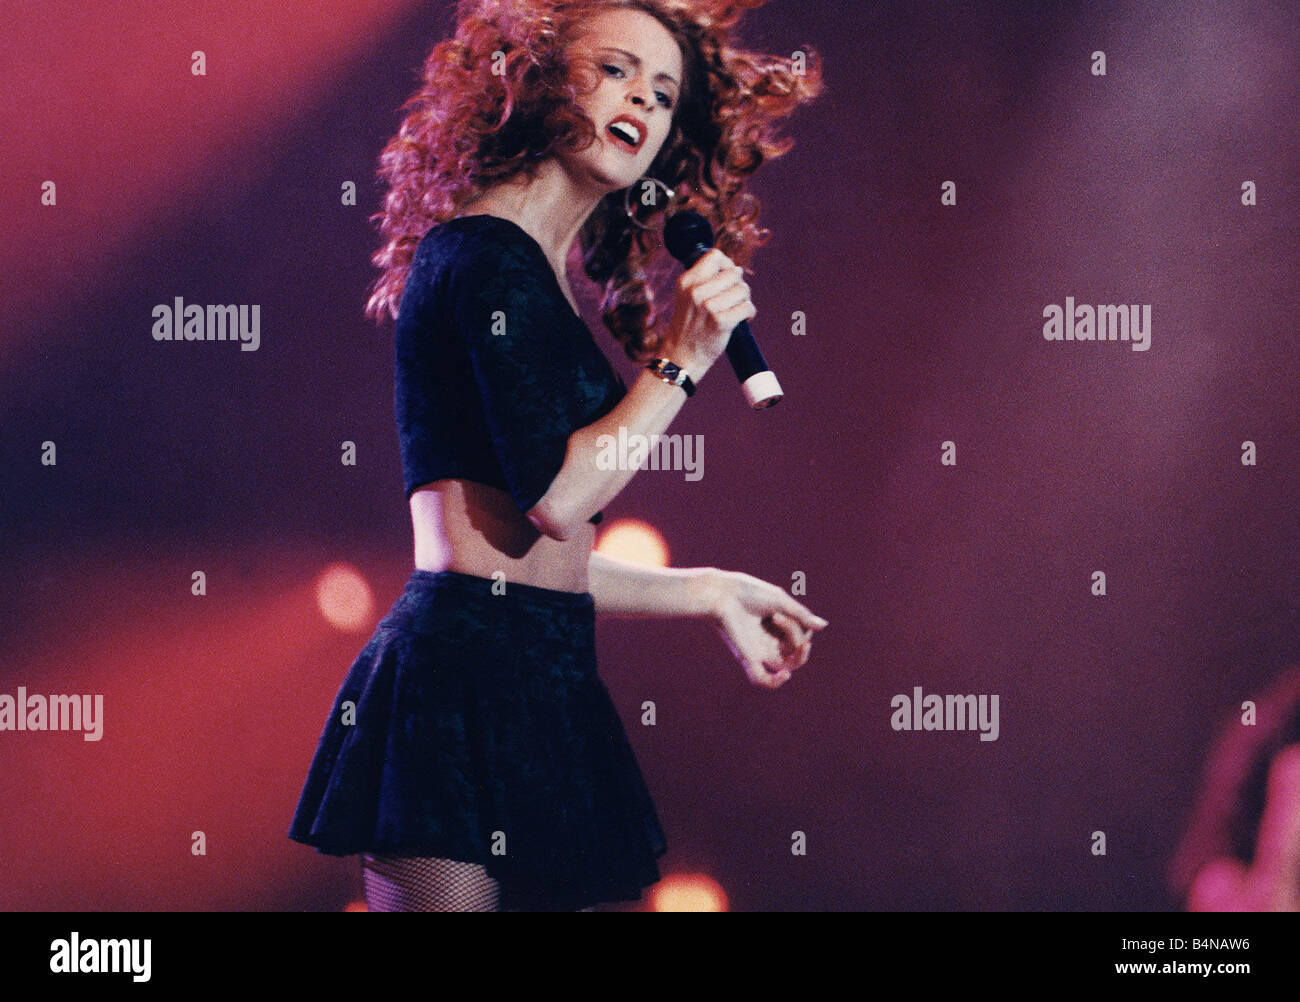 Sheena Easton singer pop music on stage Glasgow s Big Day concert Circa 1985 Stock Photo